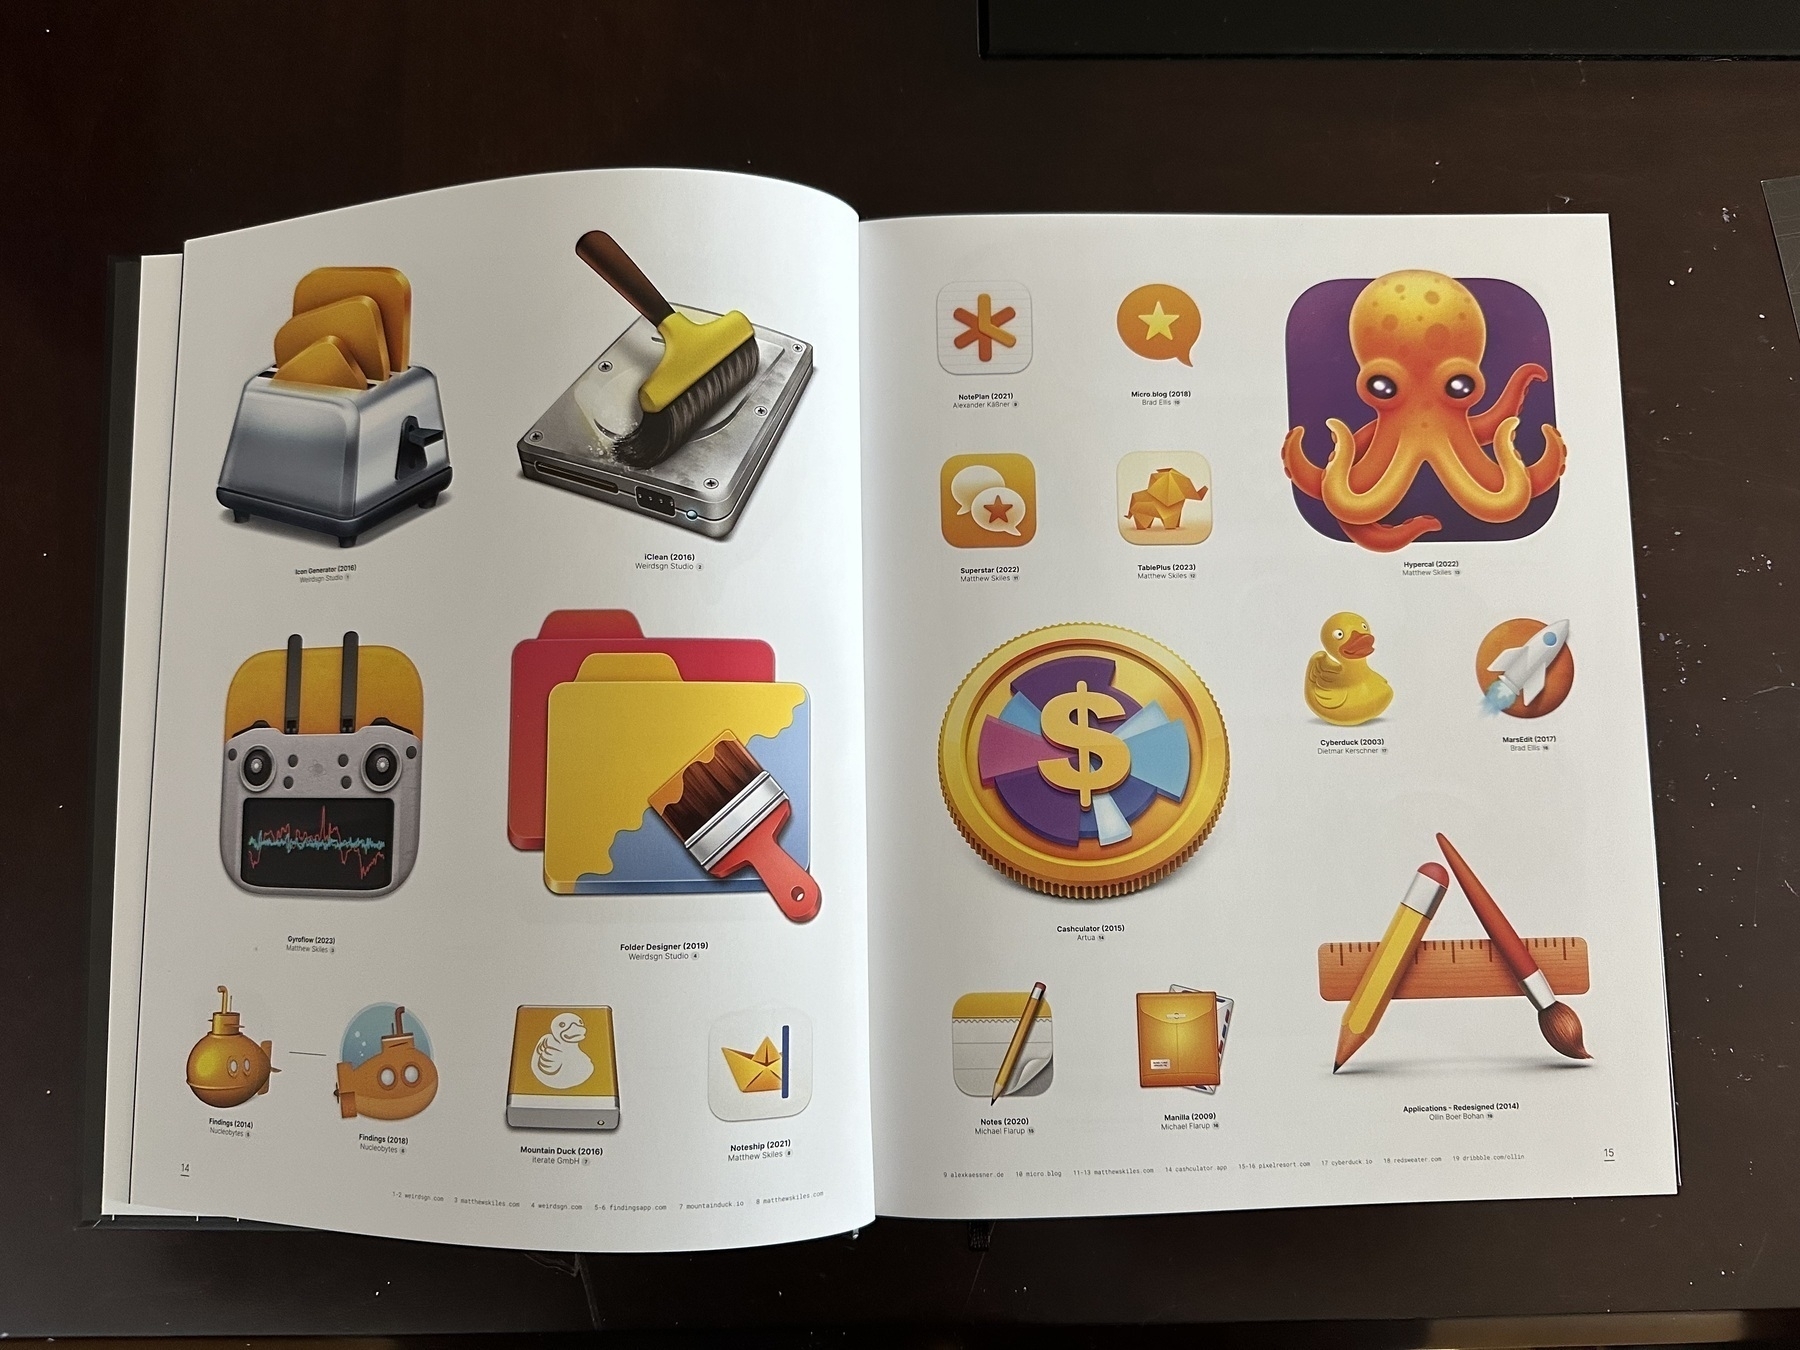 Cashculator icon in the App Icon Book